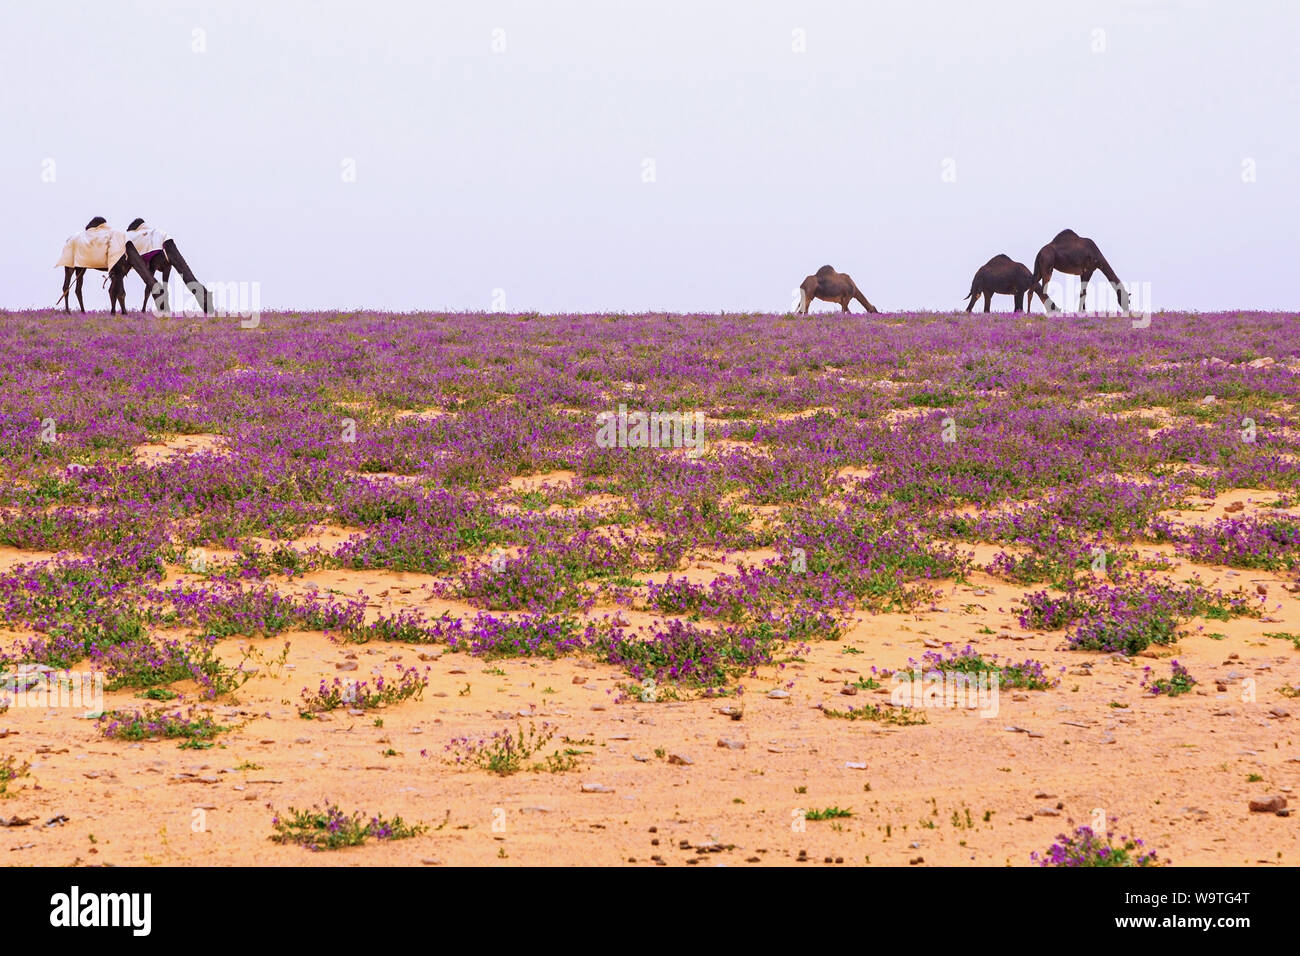 Five Camels grazing in the desert, Riyadh, Desert Stock Photo